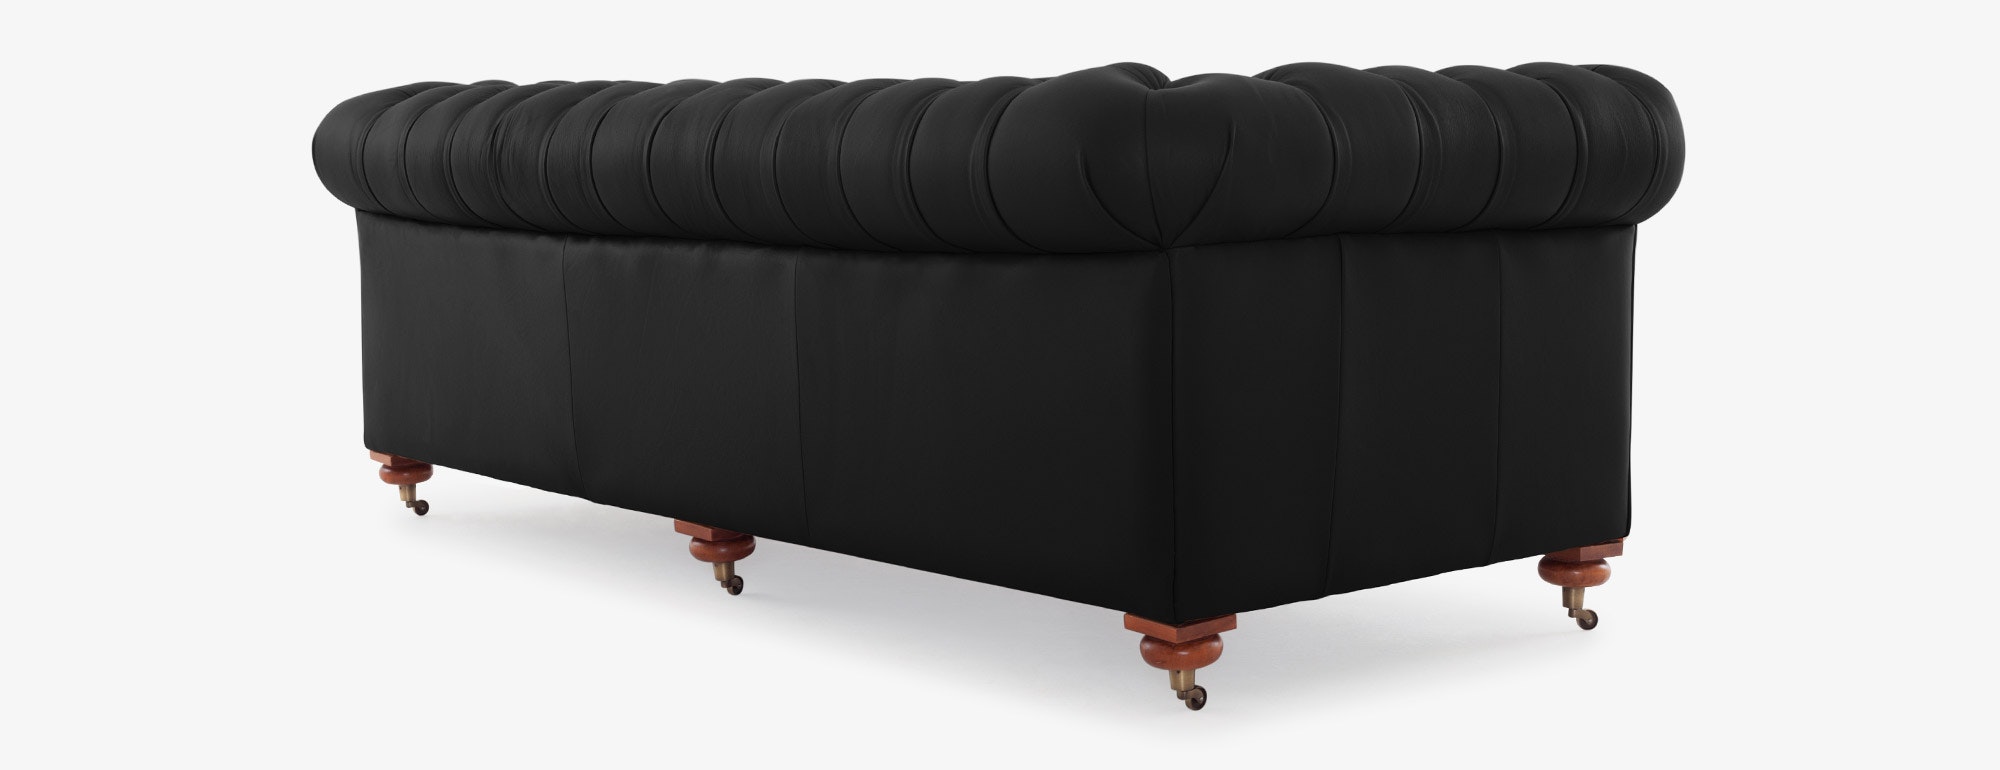 liam leather motion sofa costco